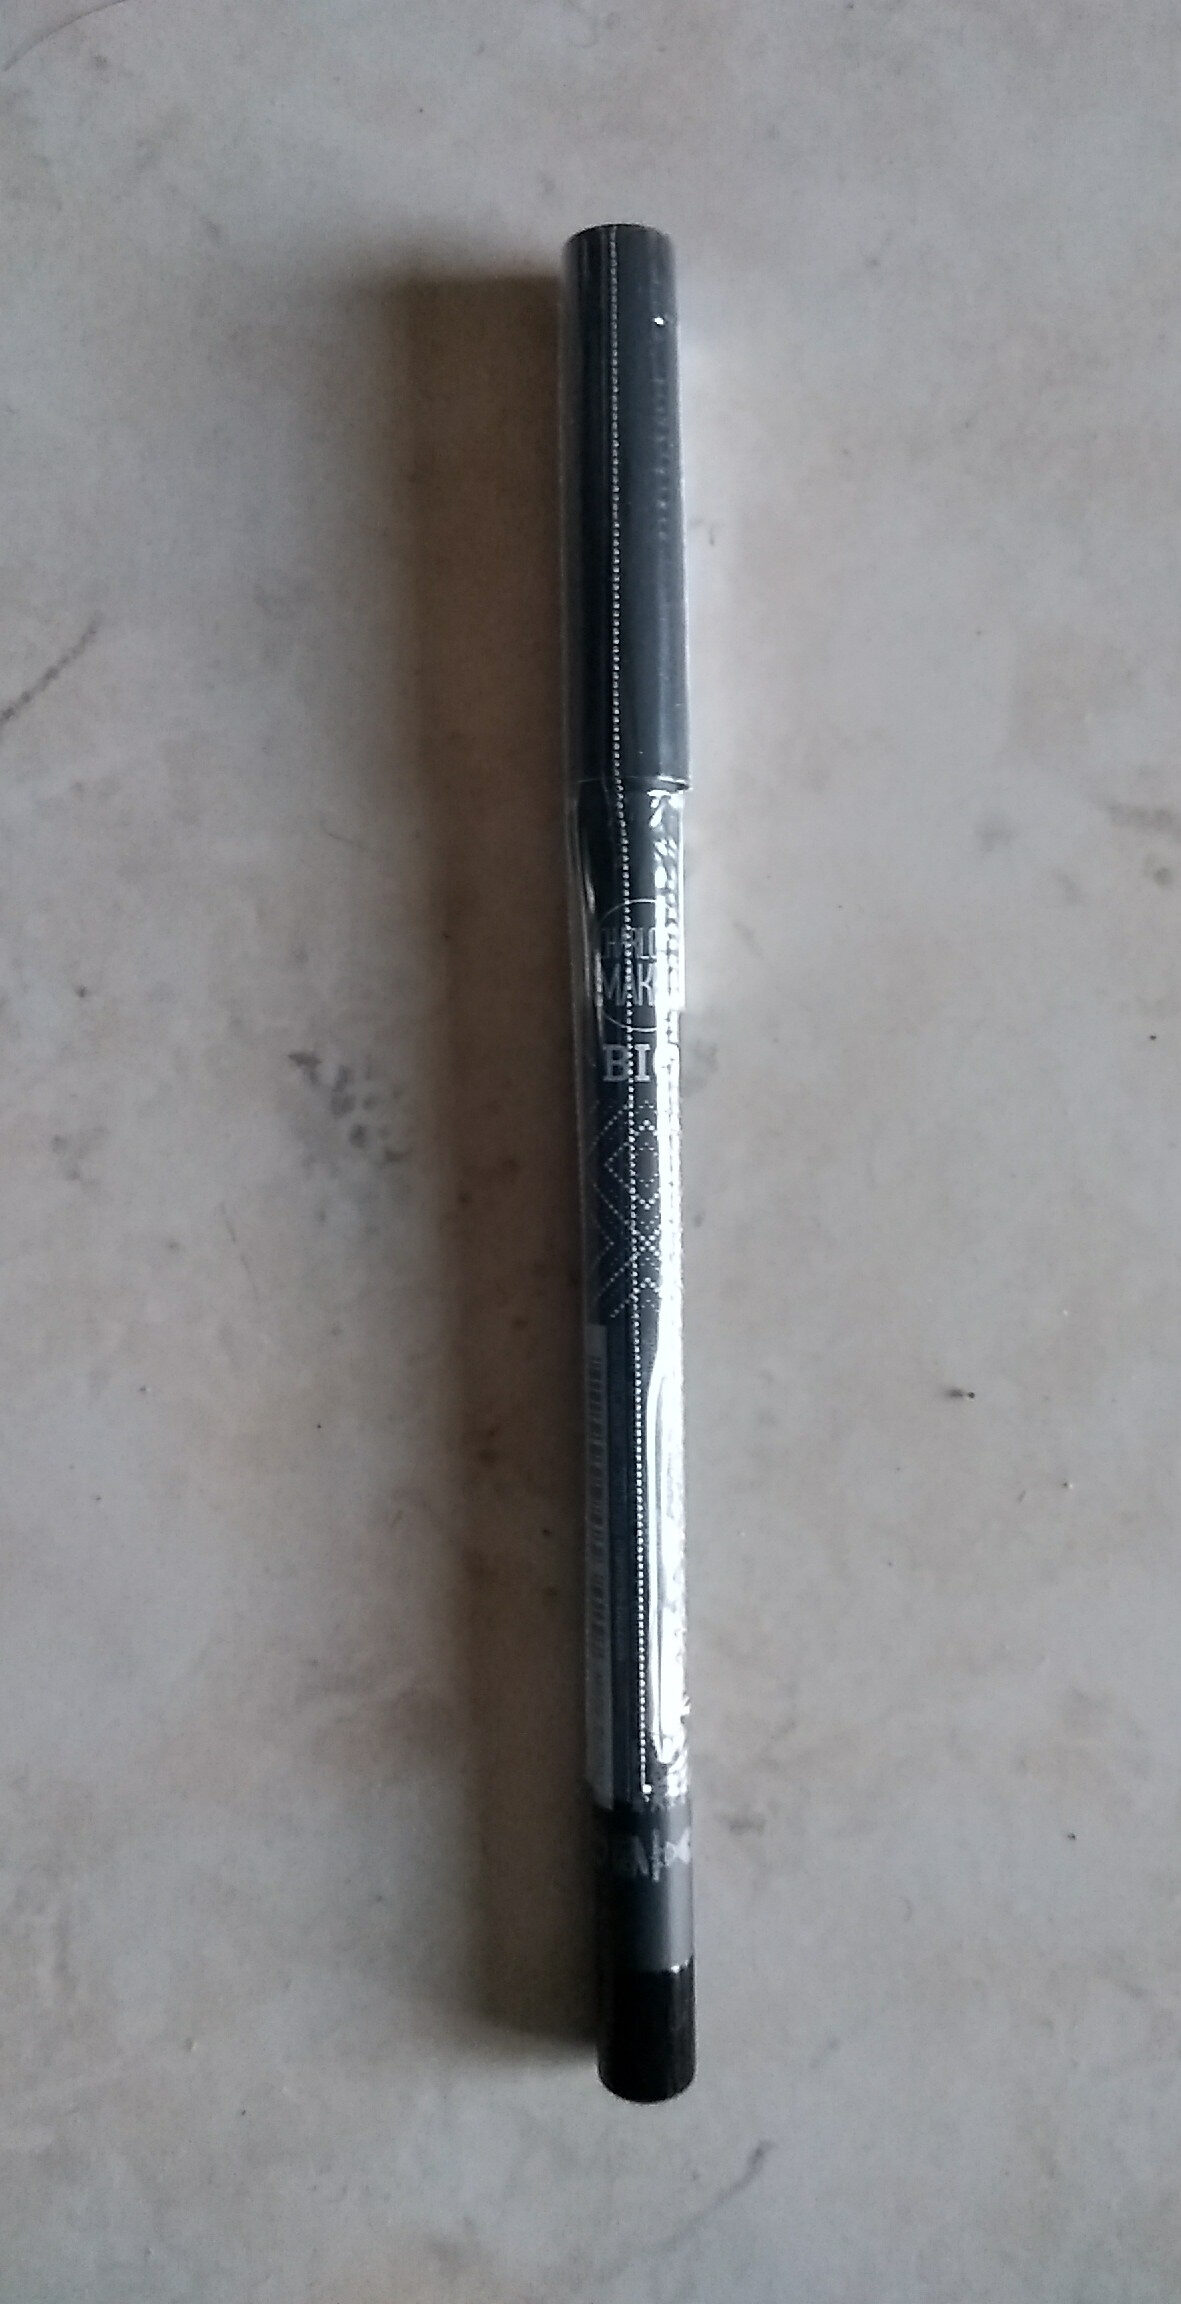 Le crayon black - Product - fr